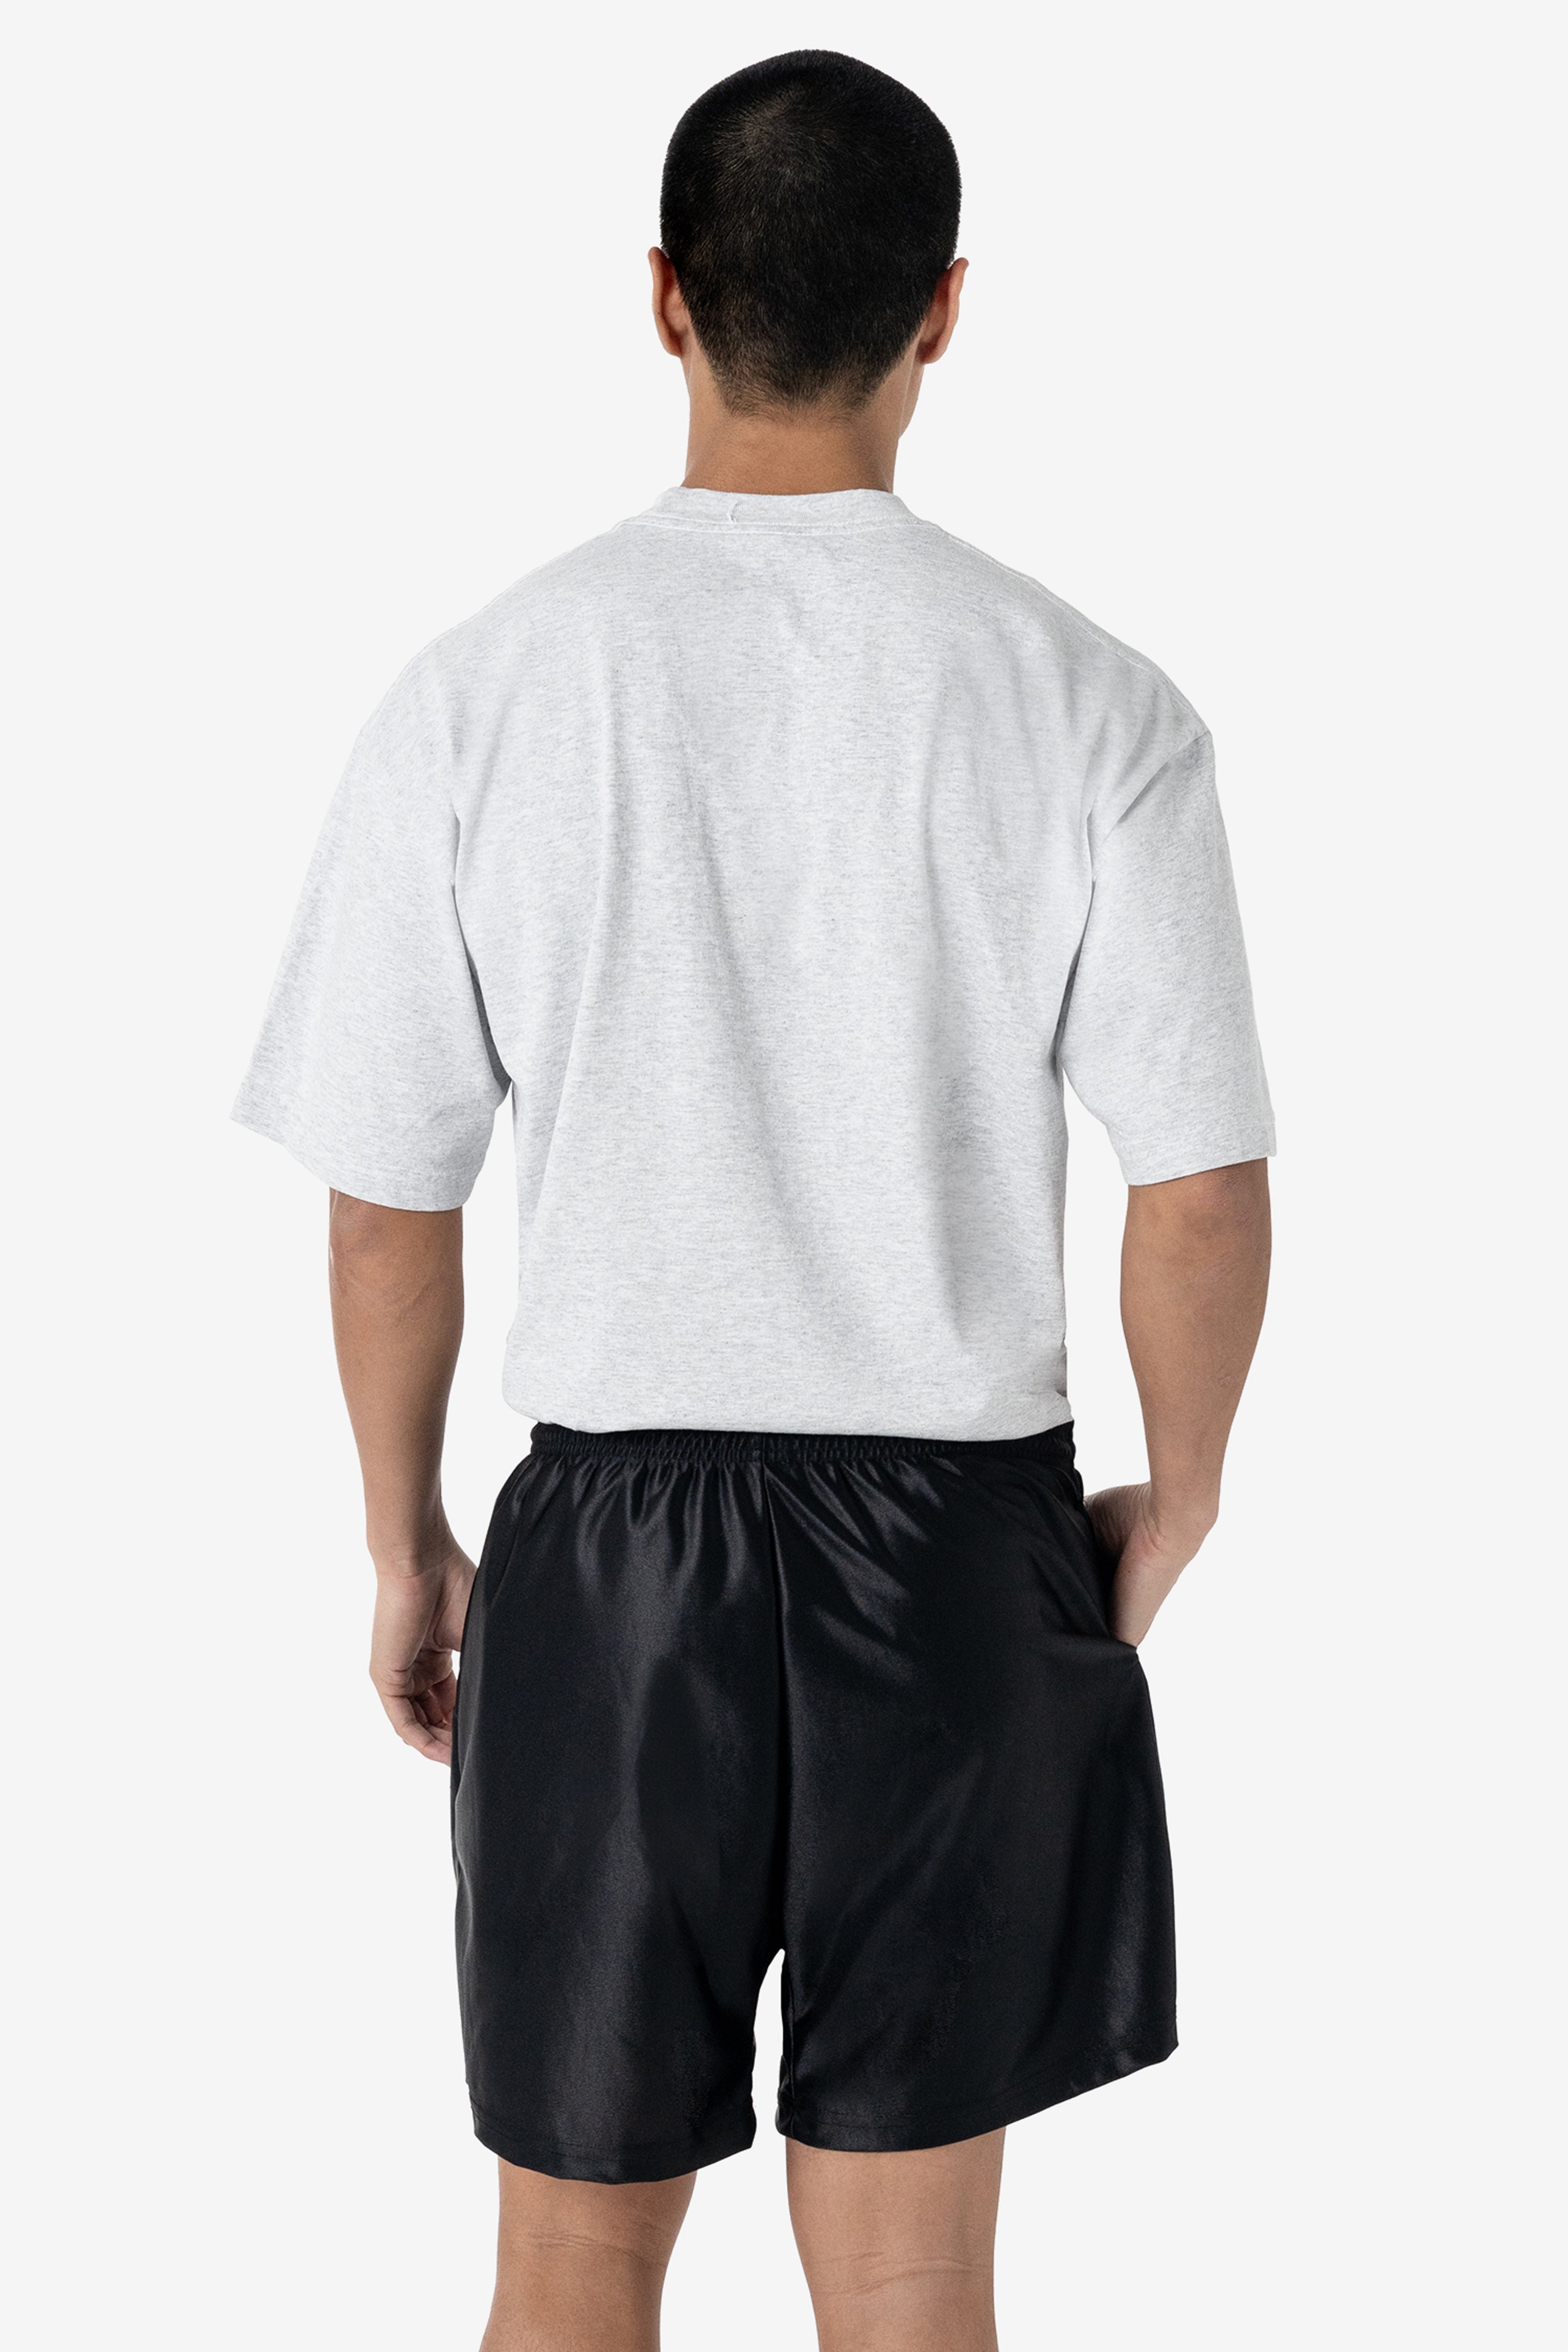 Buy Dazzle Long Shorts Pure Cotton DLS (Large, Blue) at